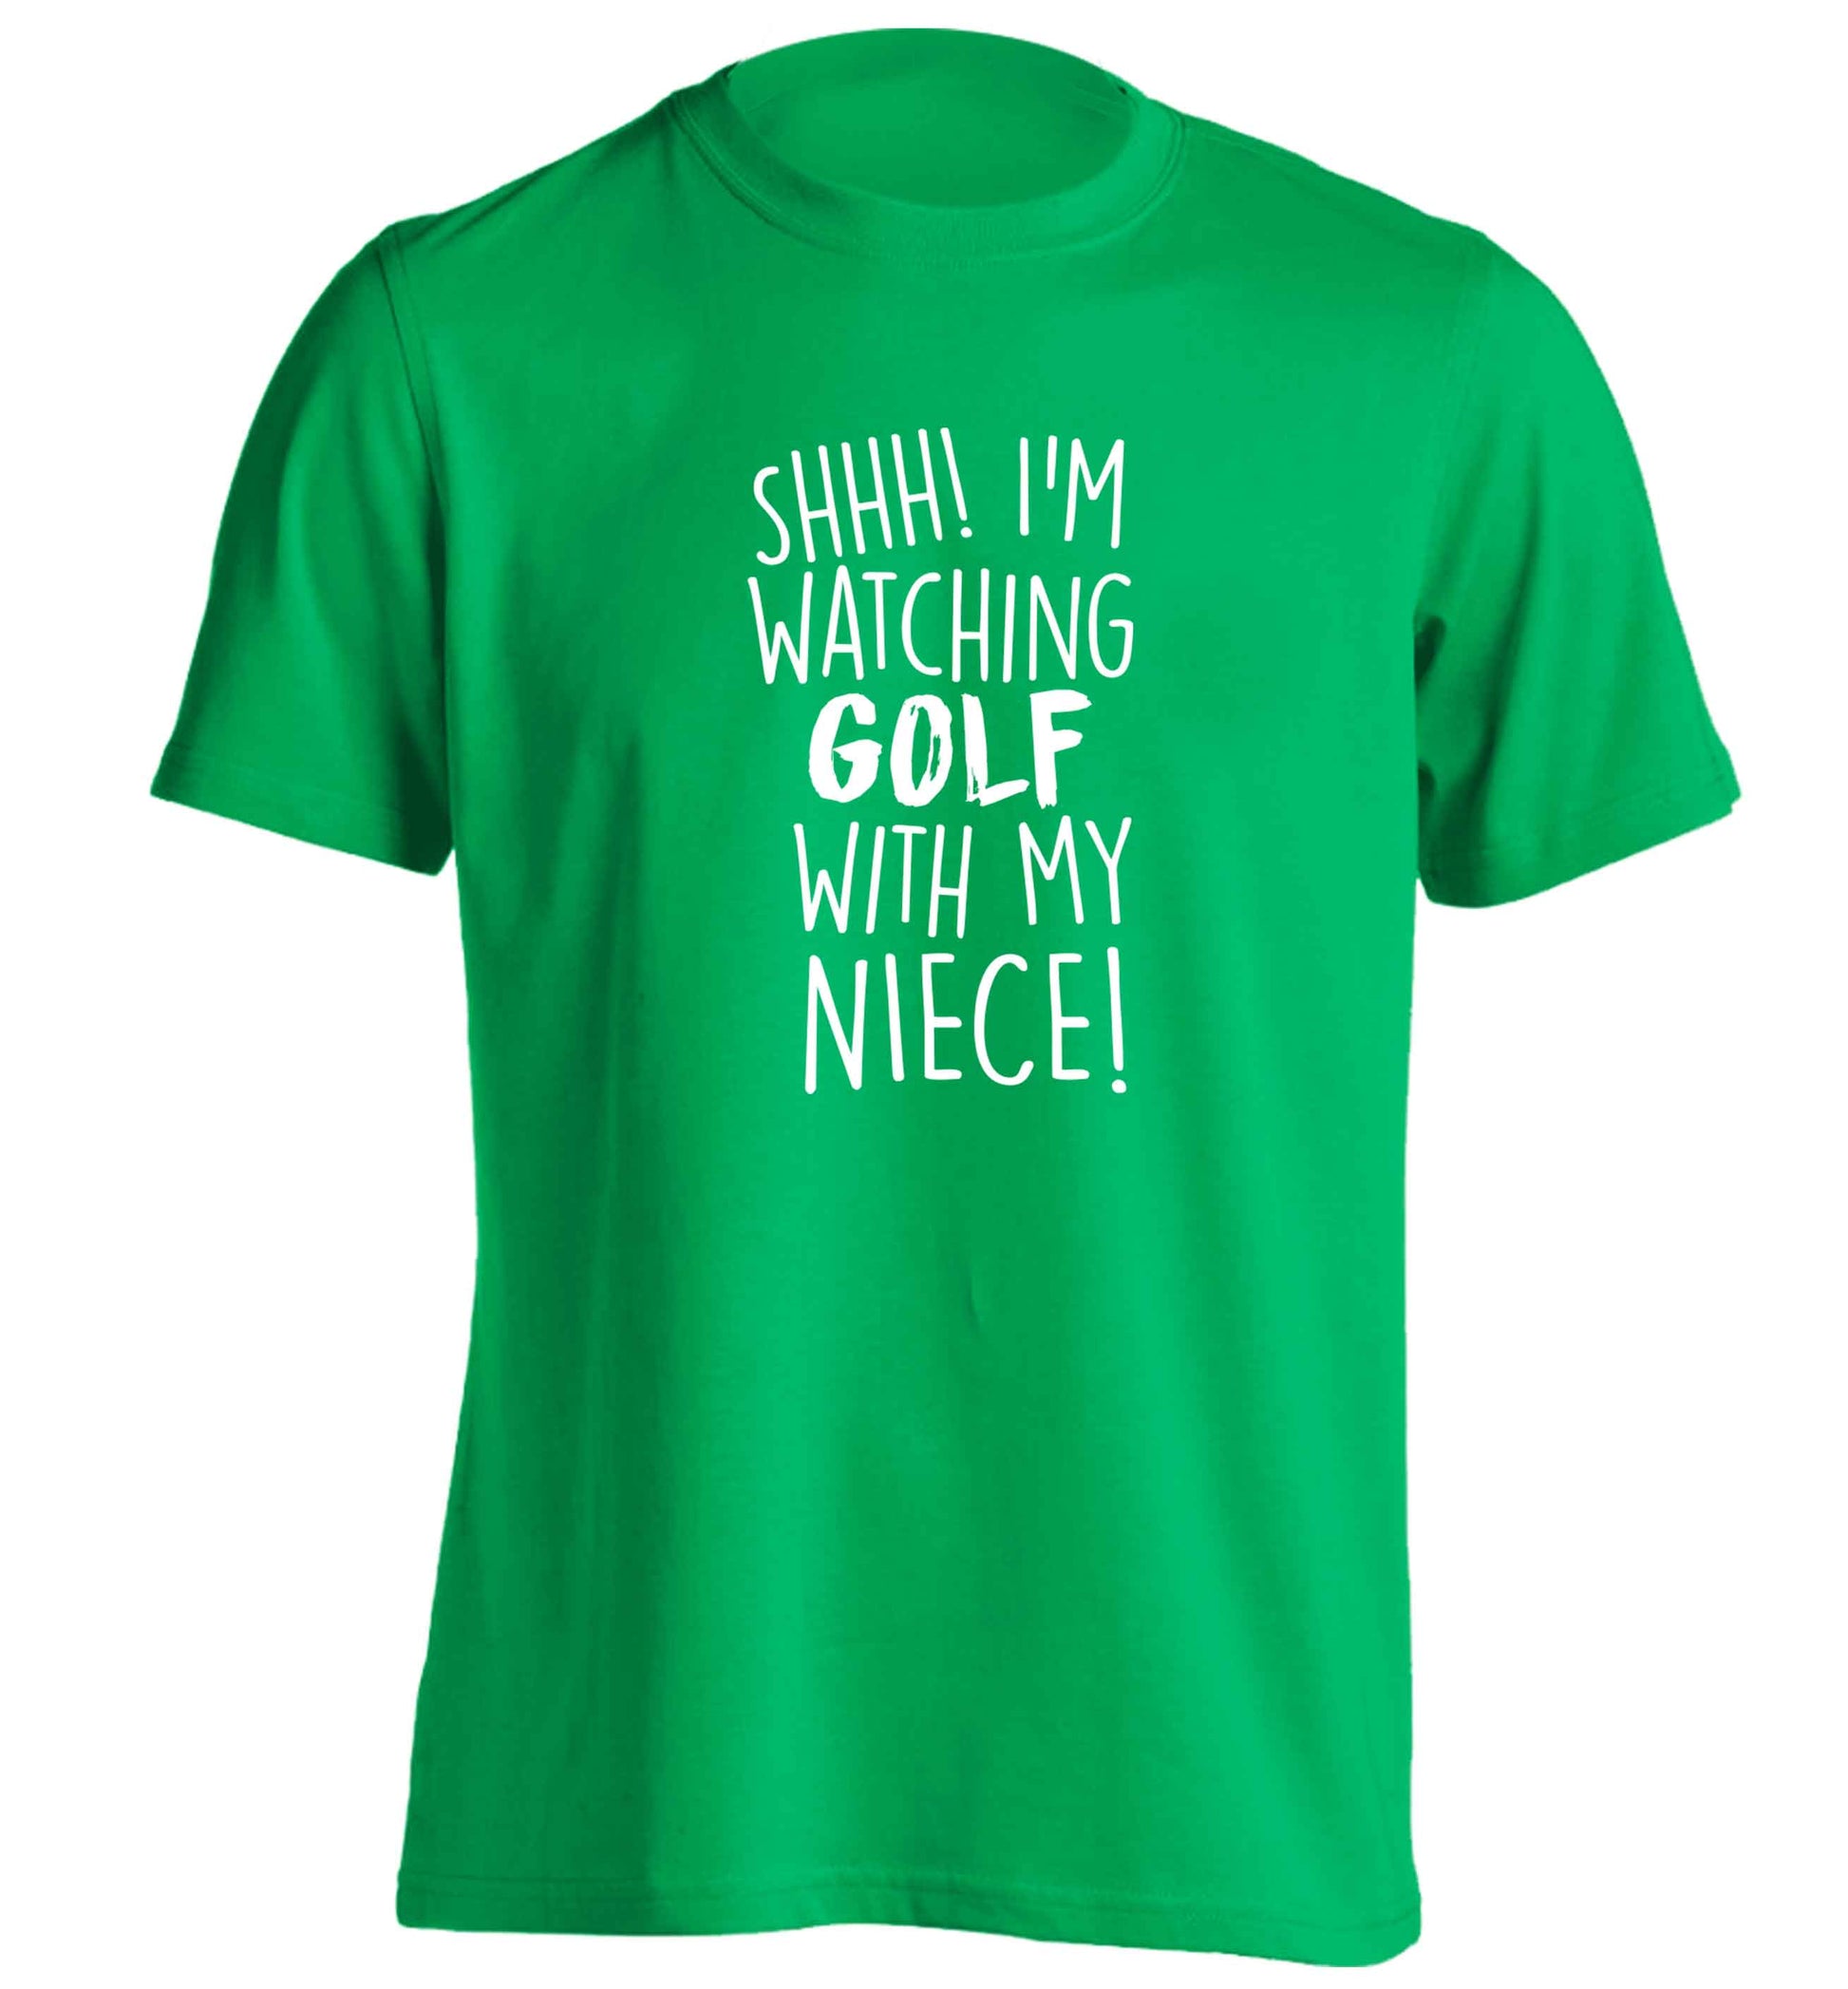 Shh I'm watching golf with my niece adults unisex green Tshirt 2XL